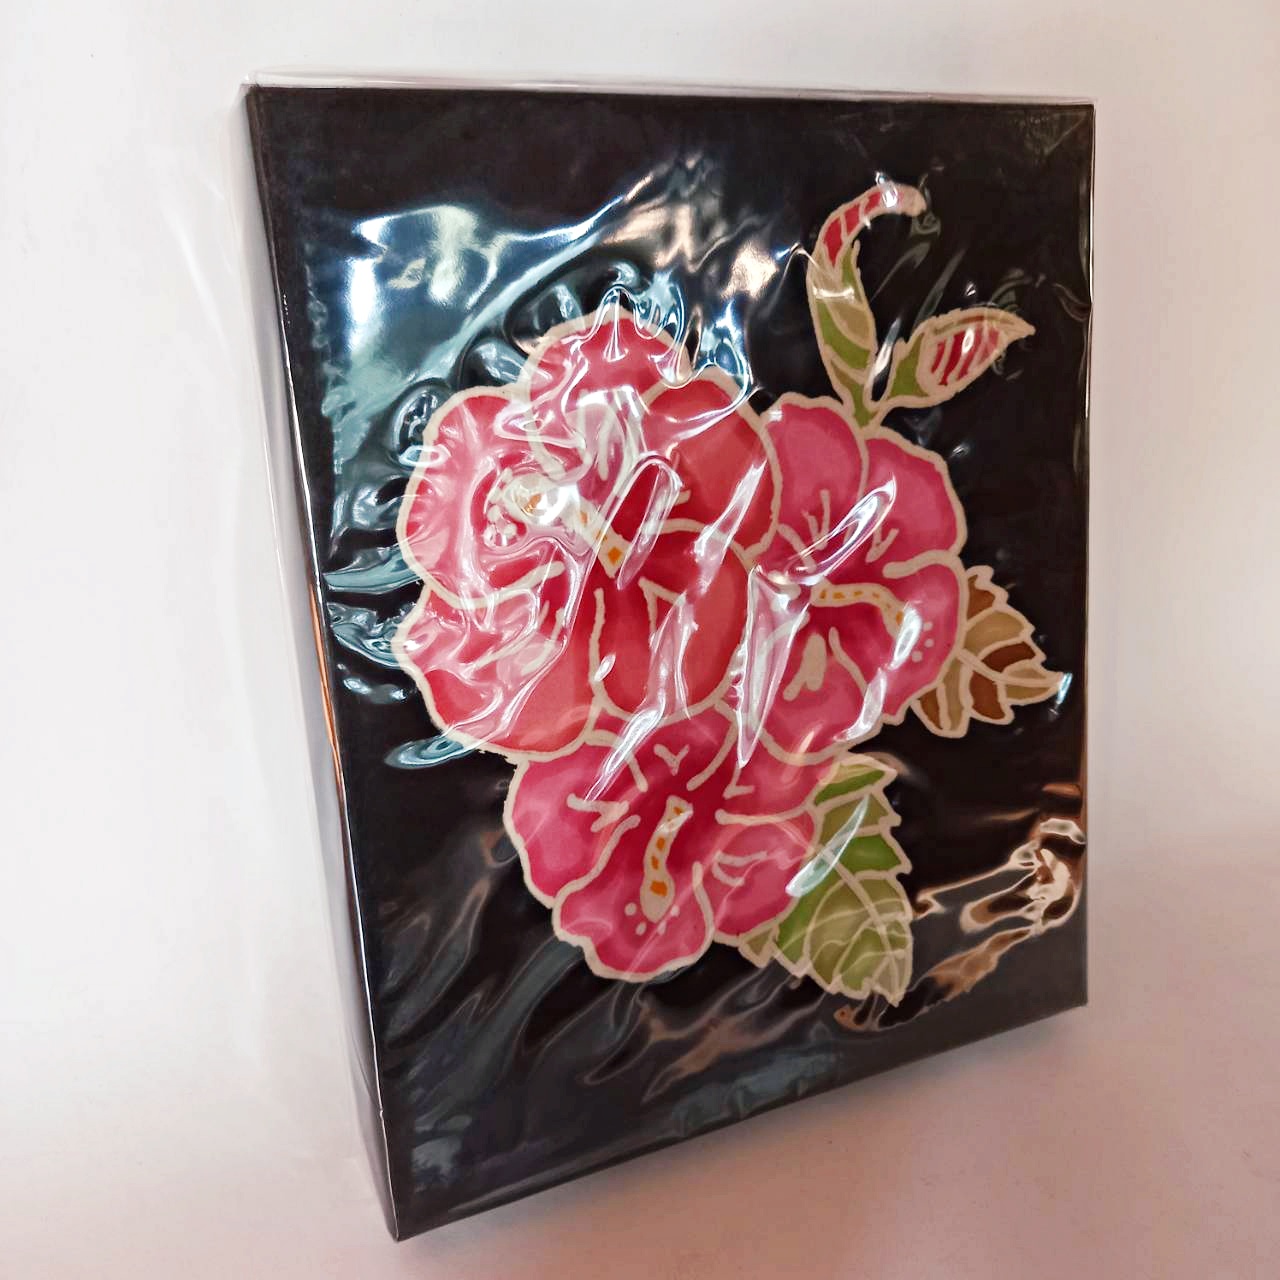 Mulberry paper box batik hand paint กล่องกระดาษสาเขียนเทียนลายดอกไม้